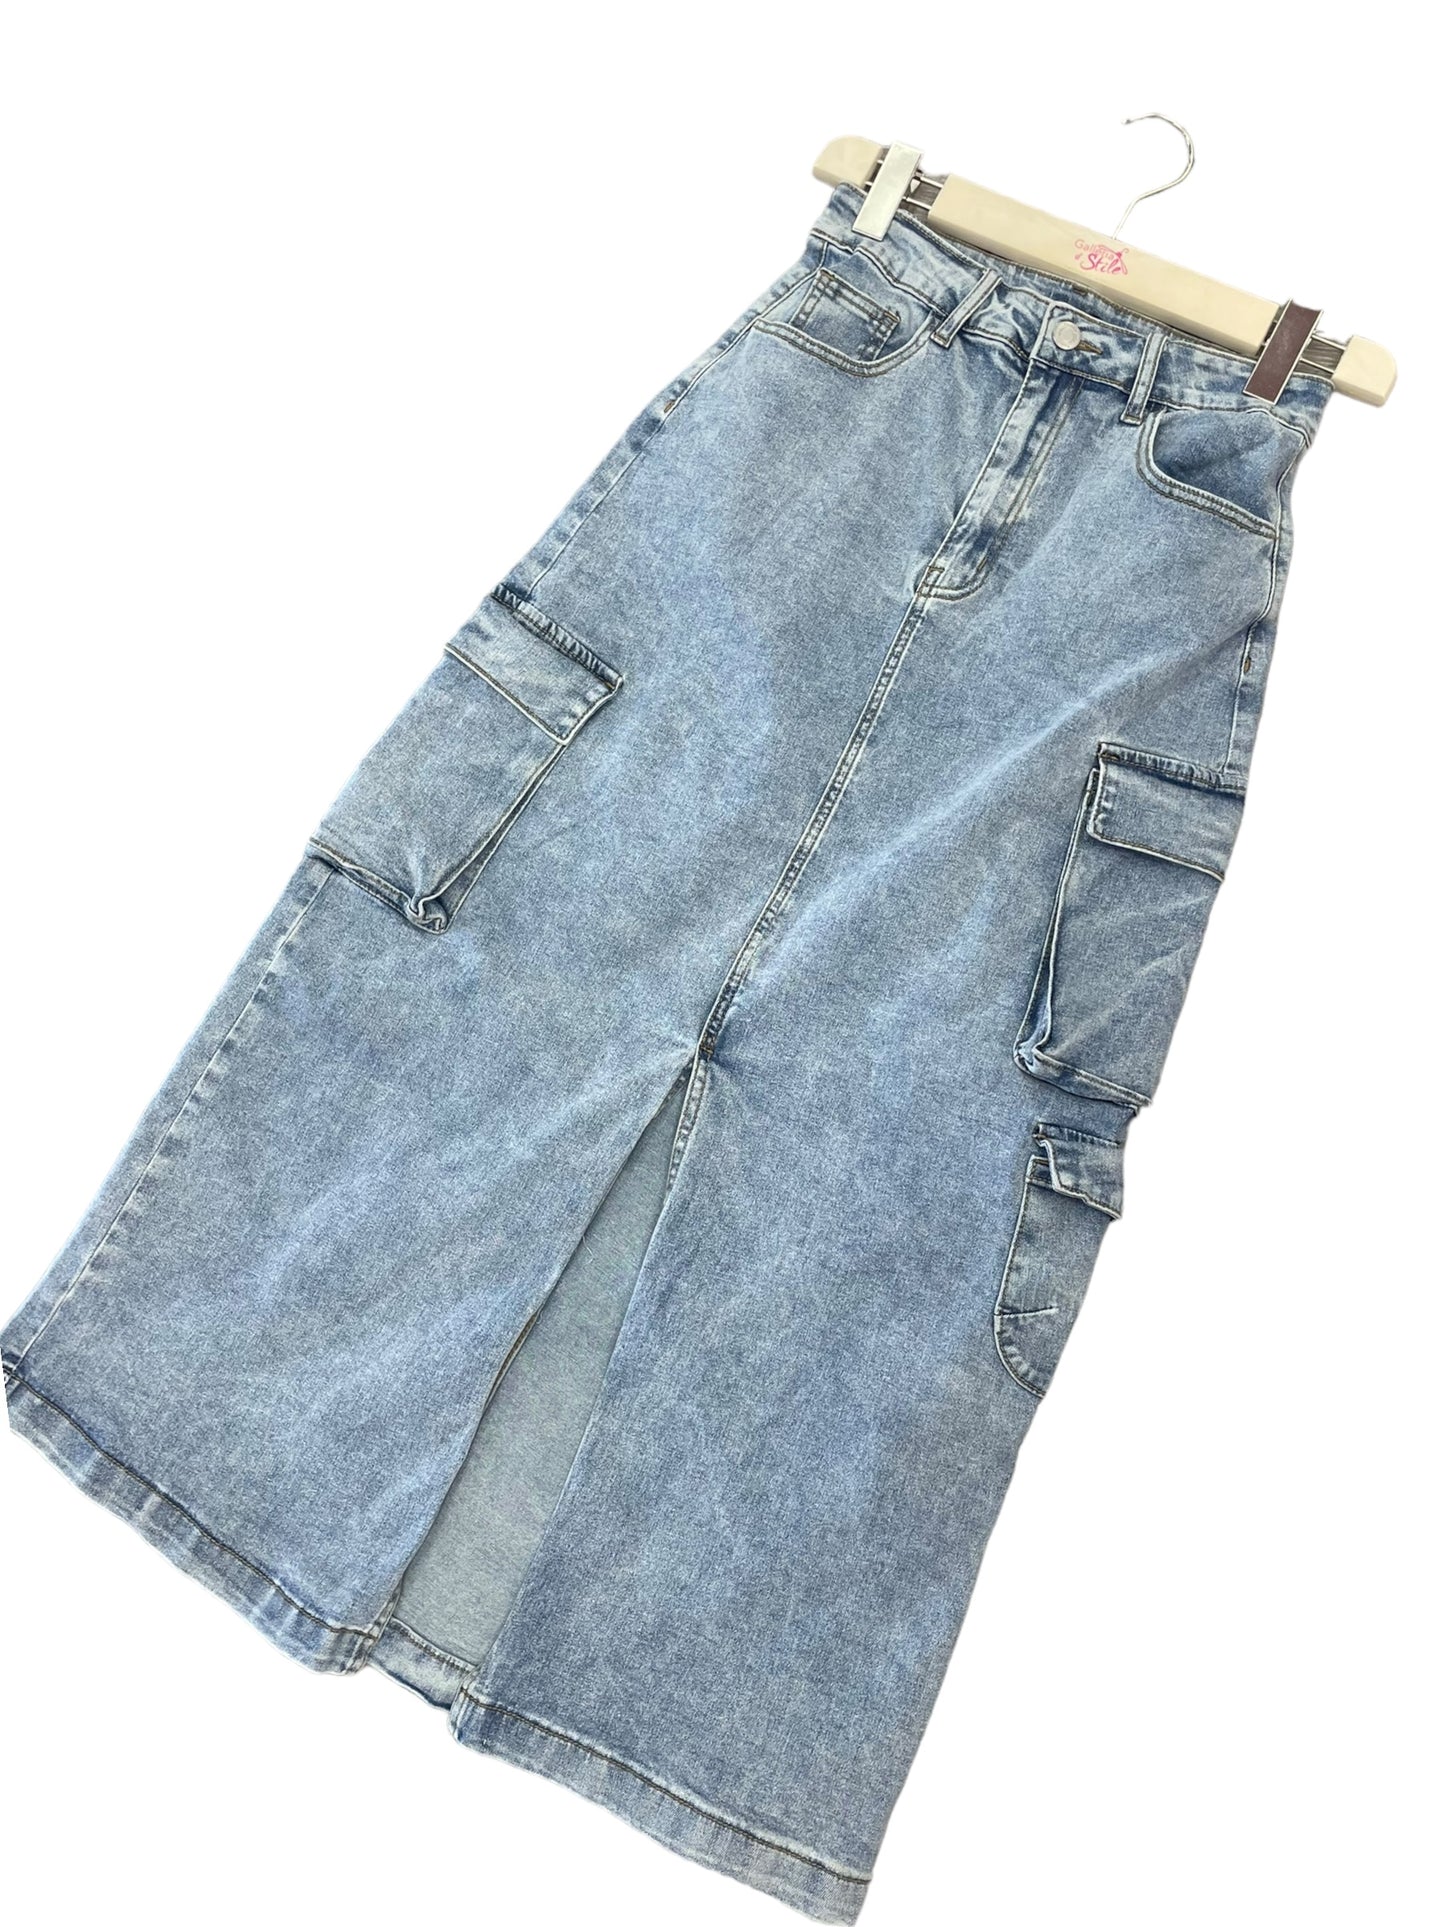 Gonna jeans cargo - abbigliamento - Stilosa